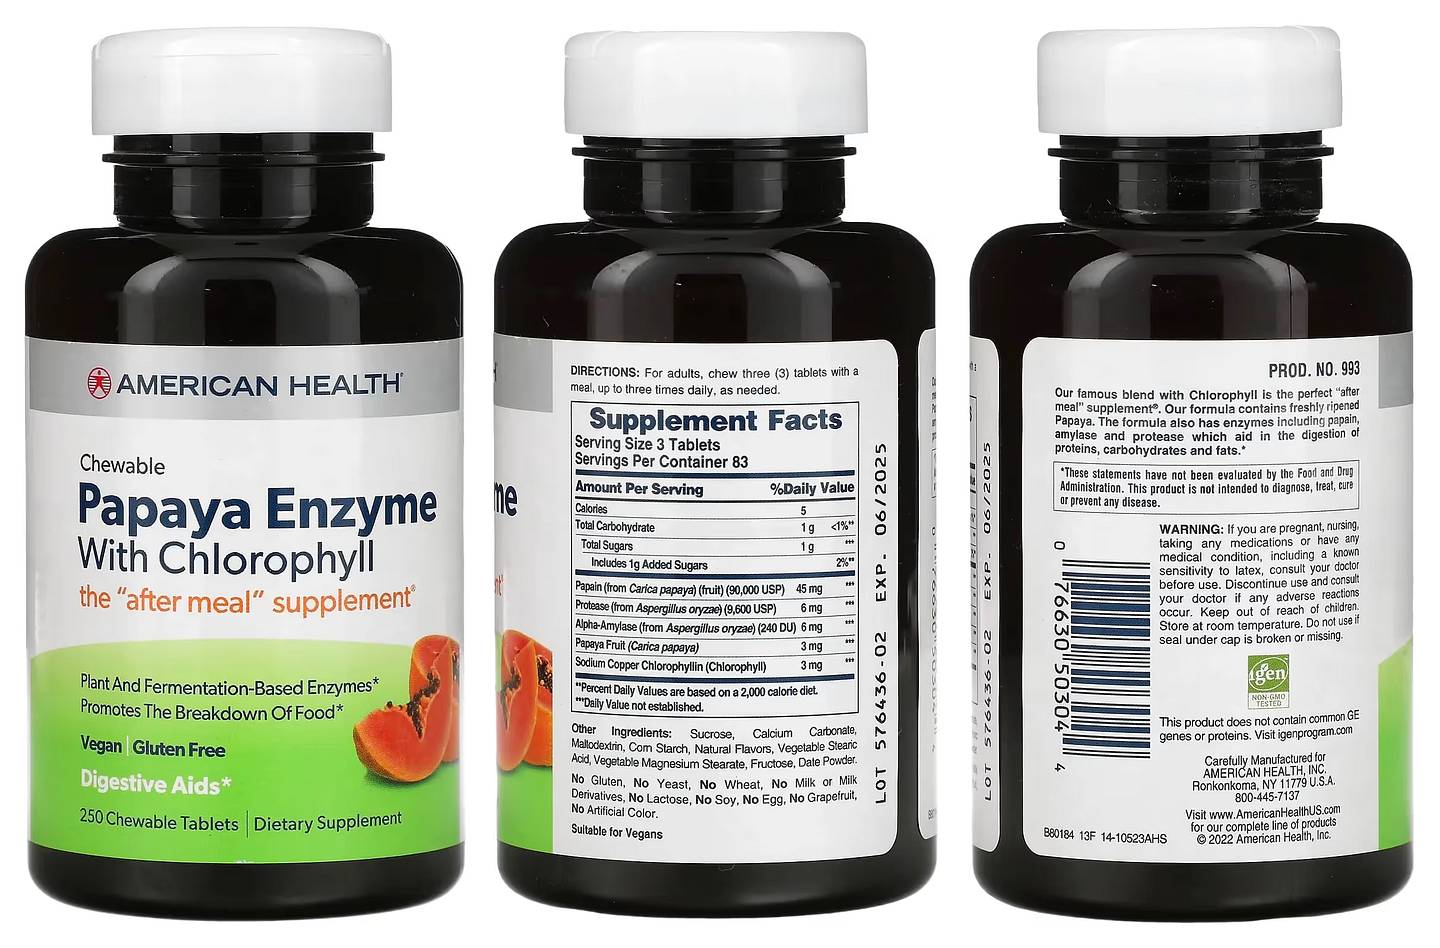 American Health, Papaya Enzyme with Chlorophyll packaging